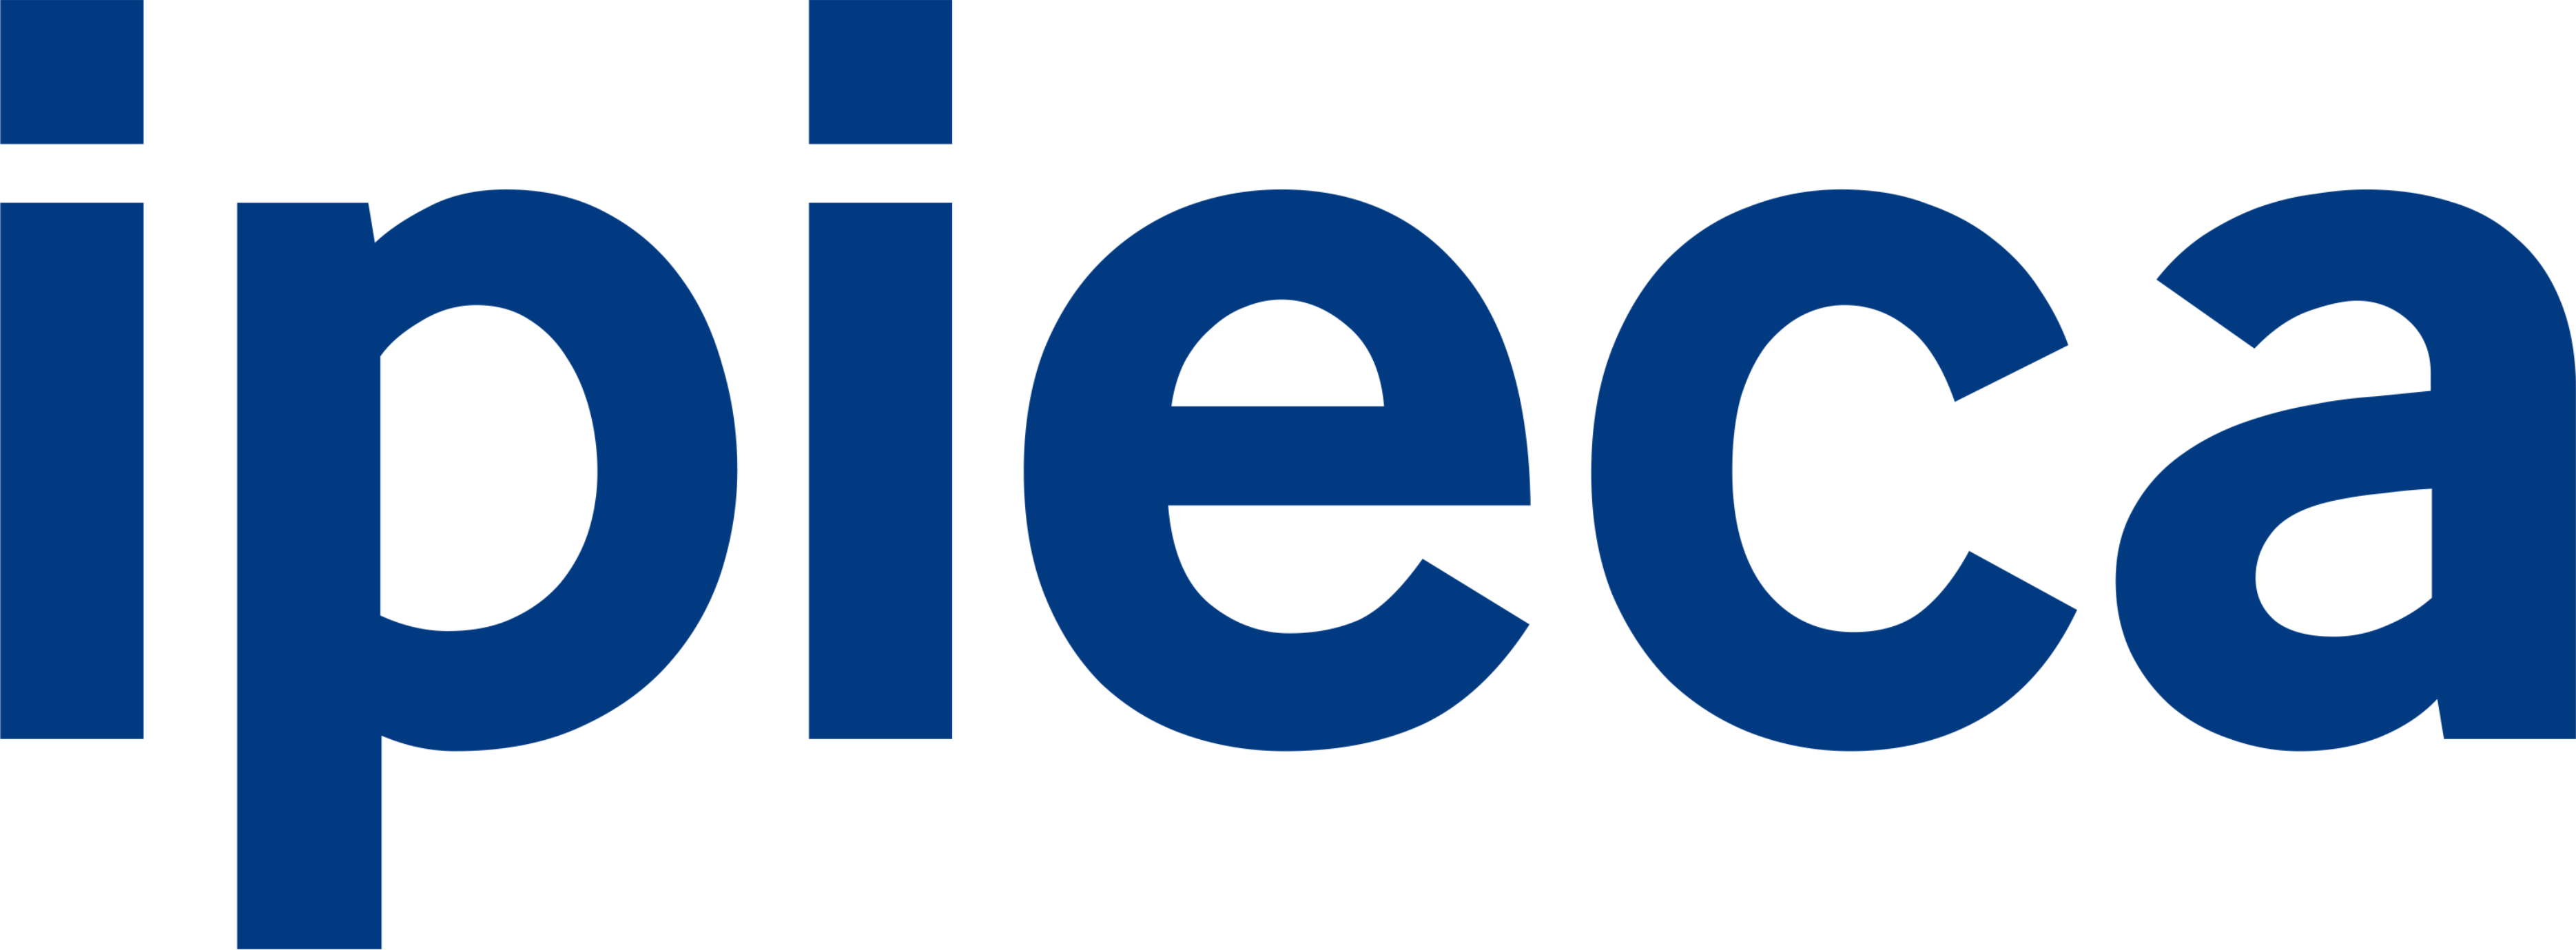 IPIECA logo